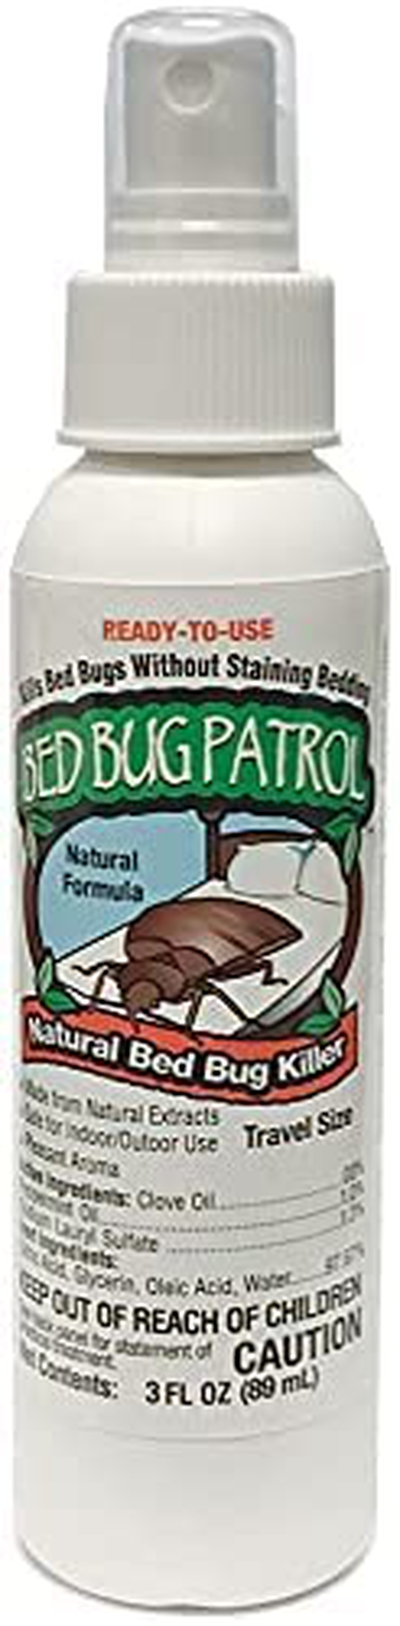 Bed Bug Patrol | Safe Travels - Bed Bug Blasting Travel Spray, 3oz